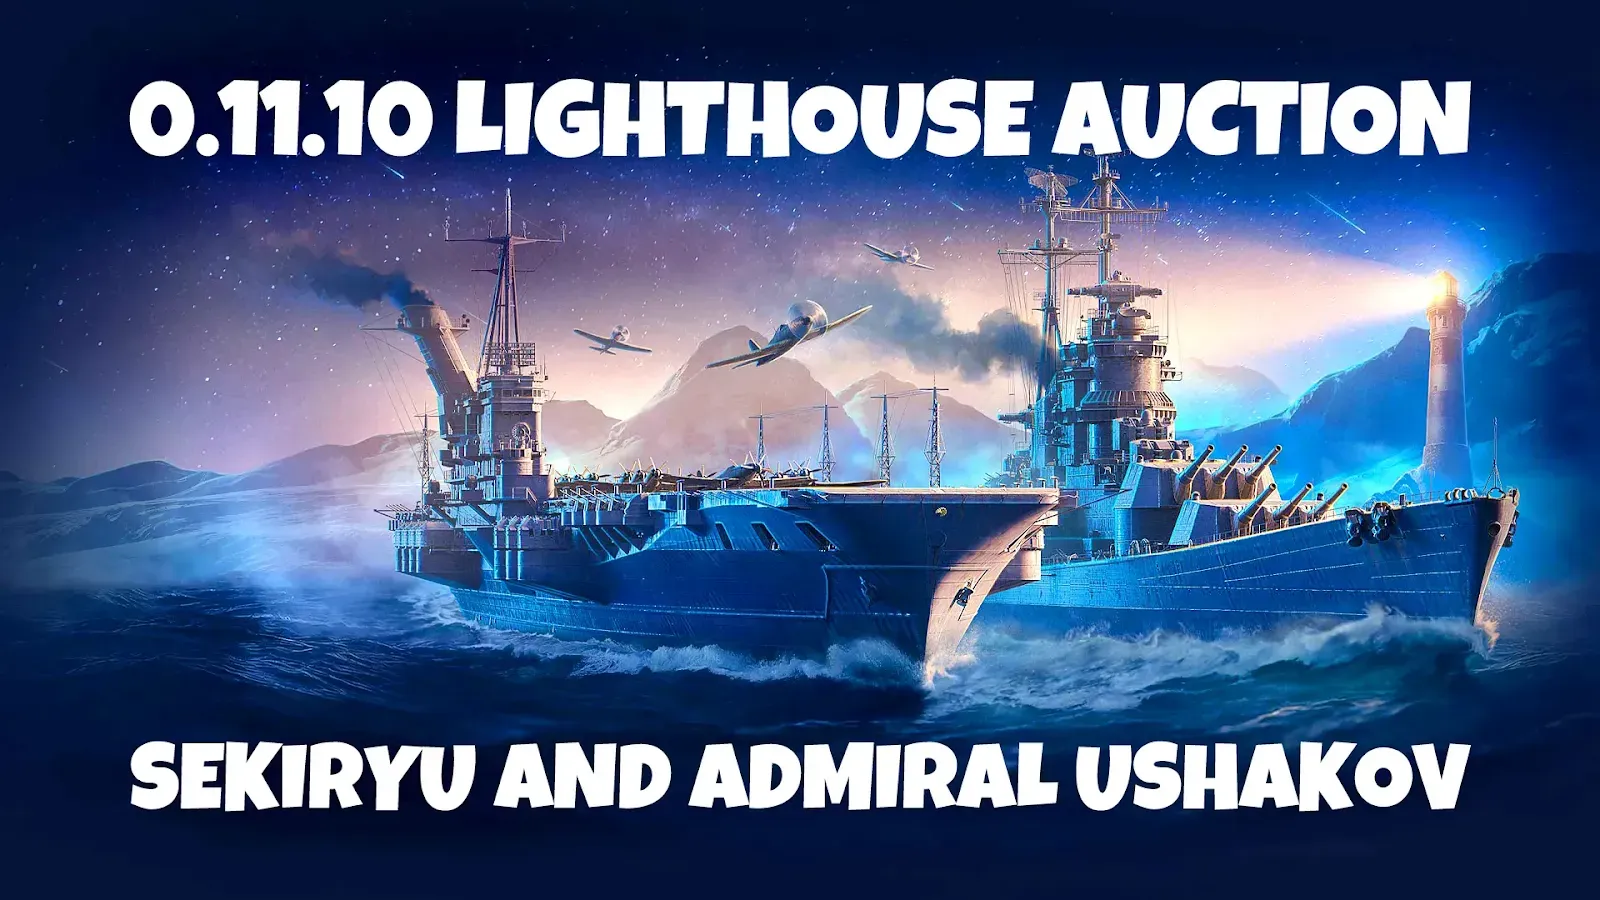 lighthouse auction